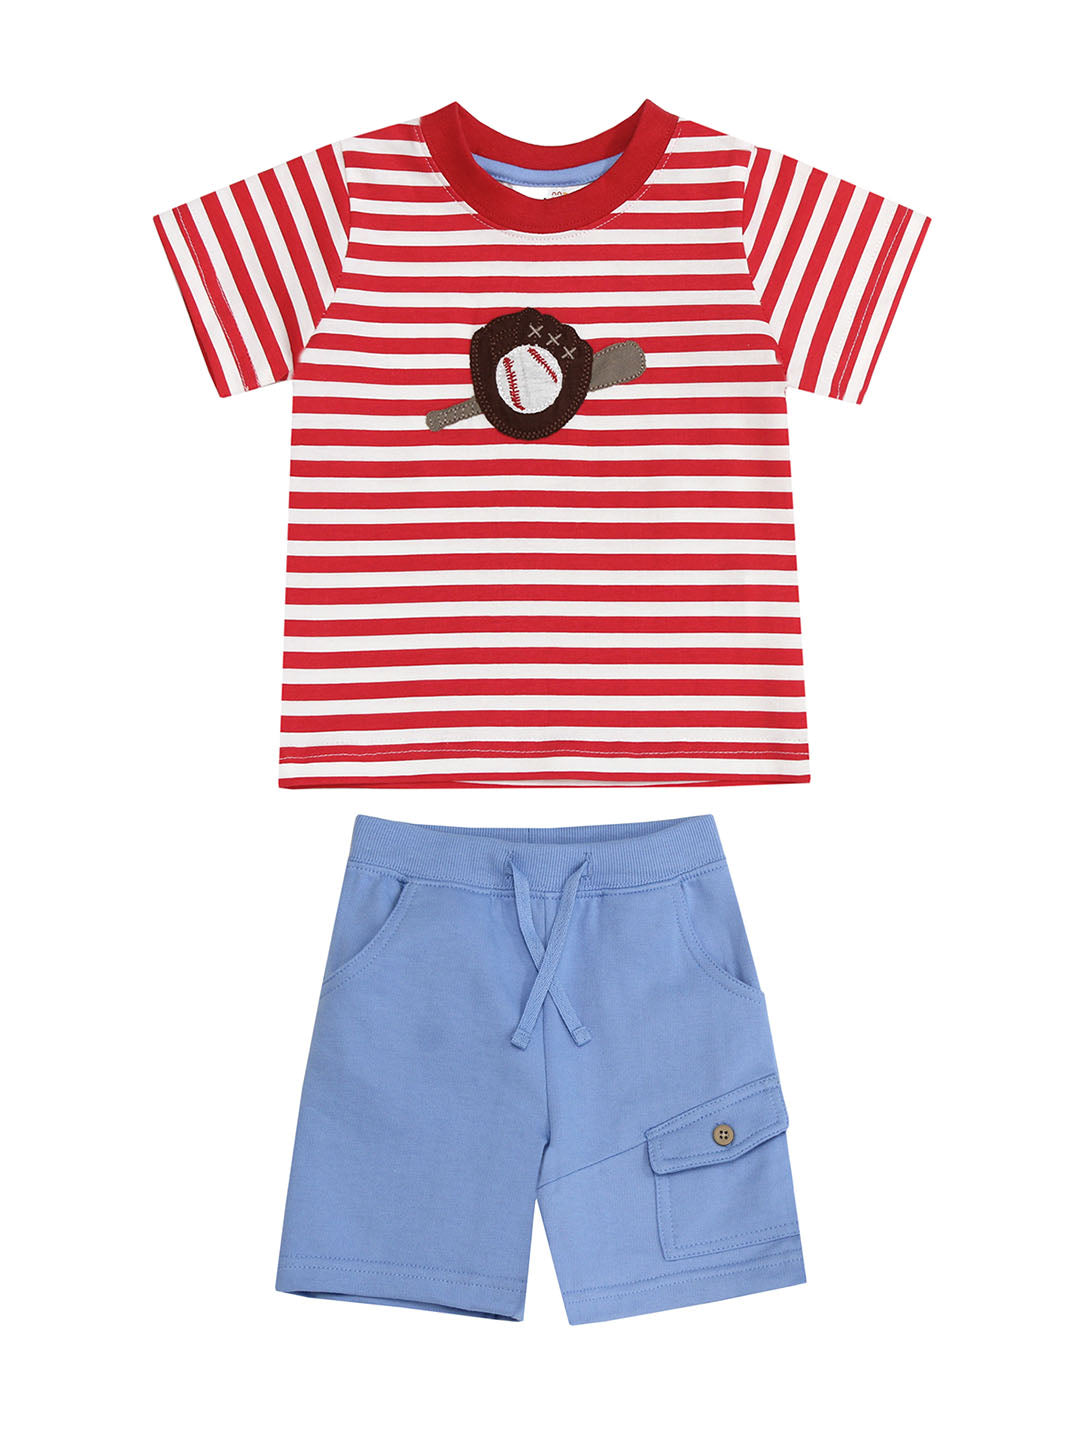 Red Stripe Baseball Tee & Blue Shorts Set